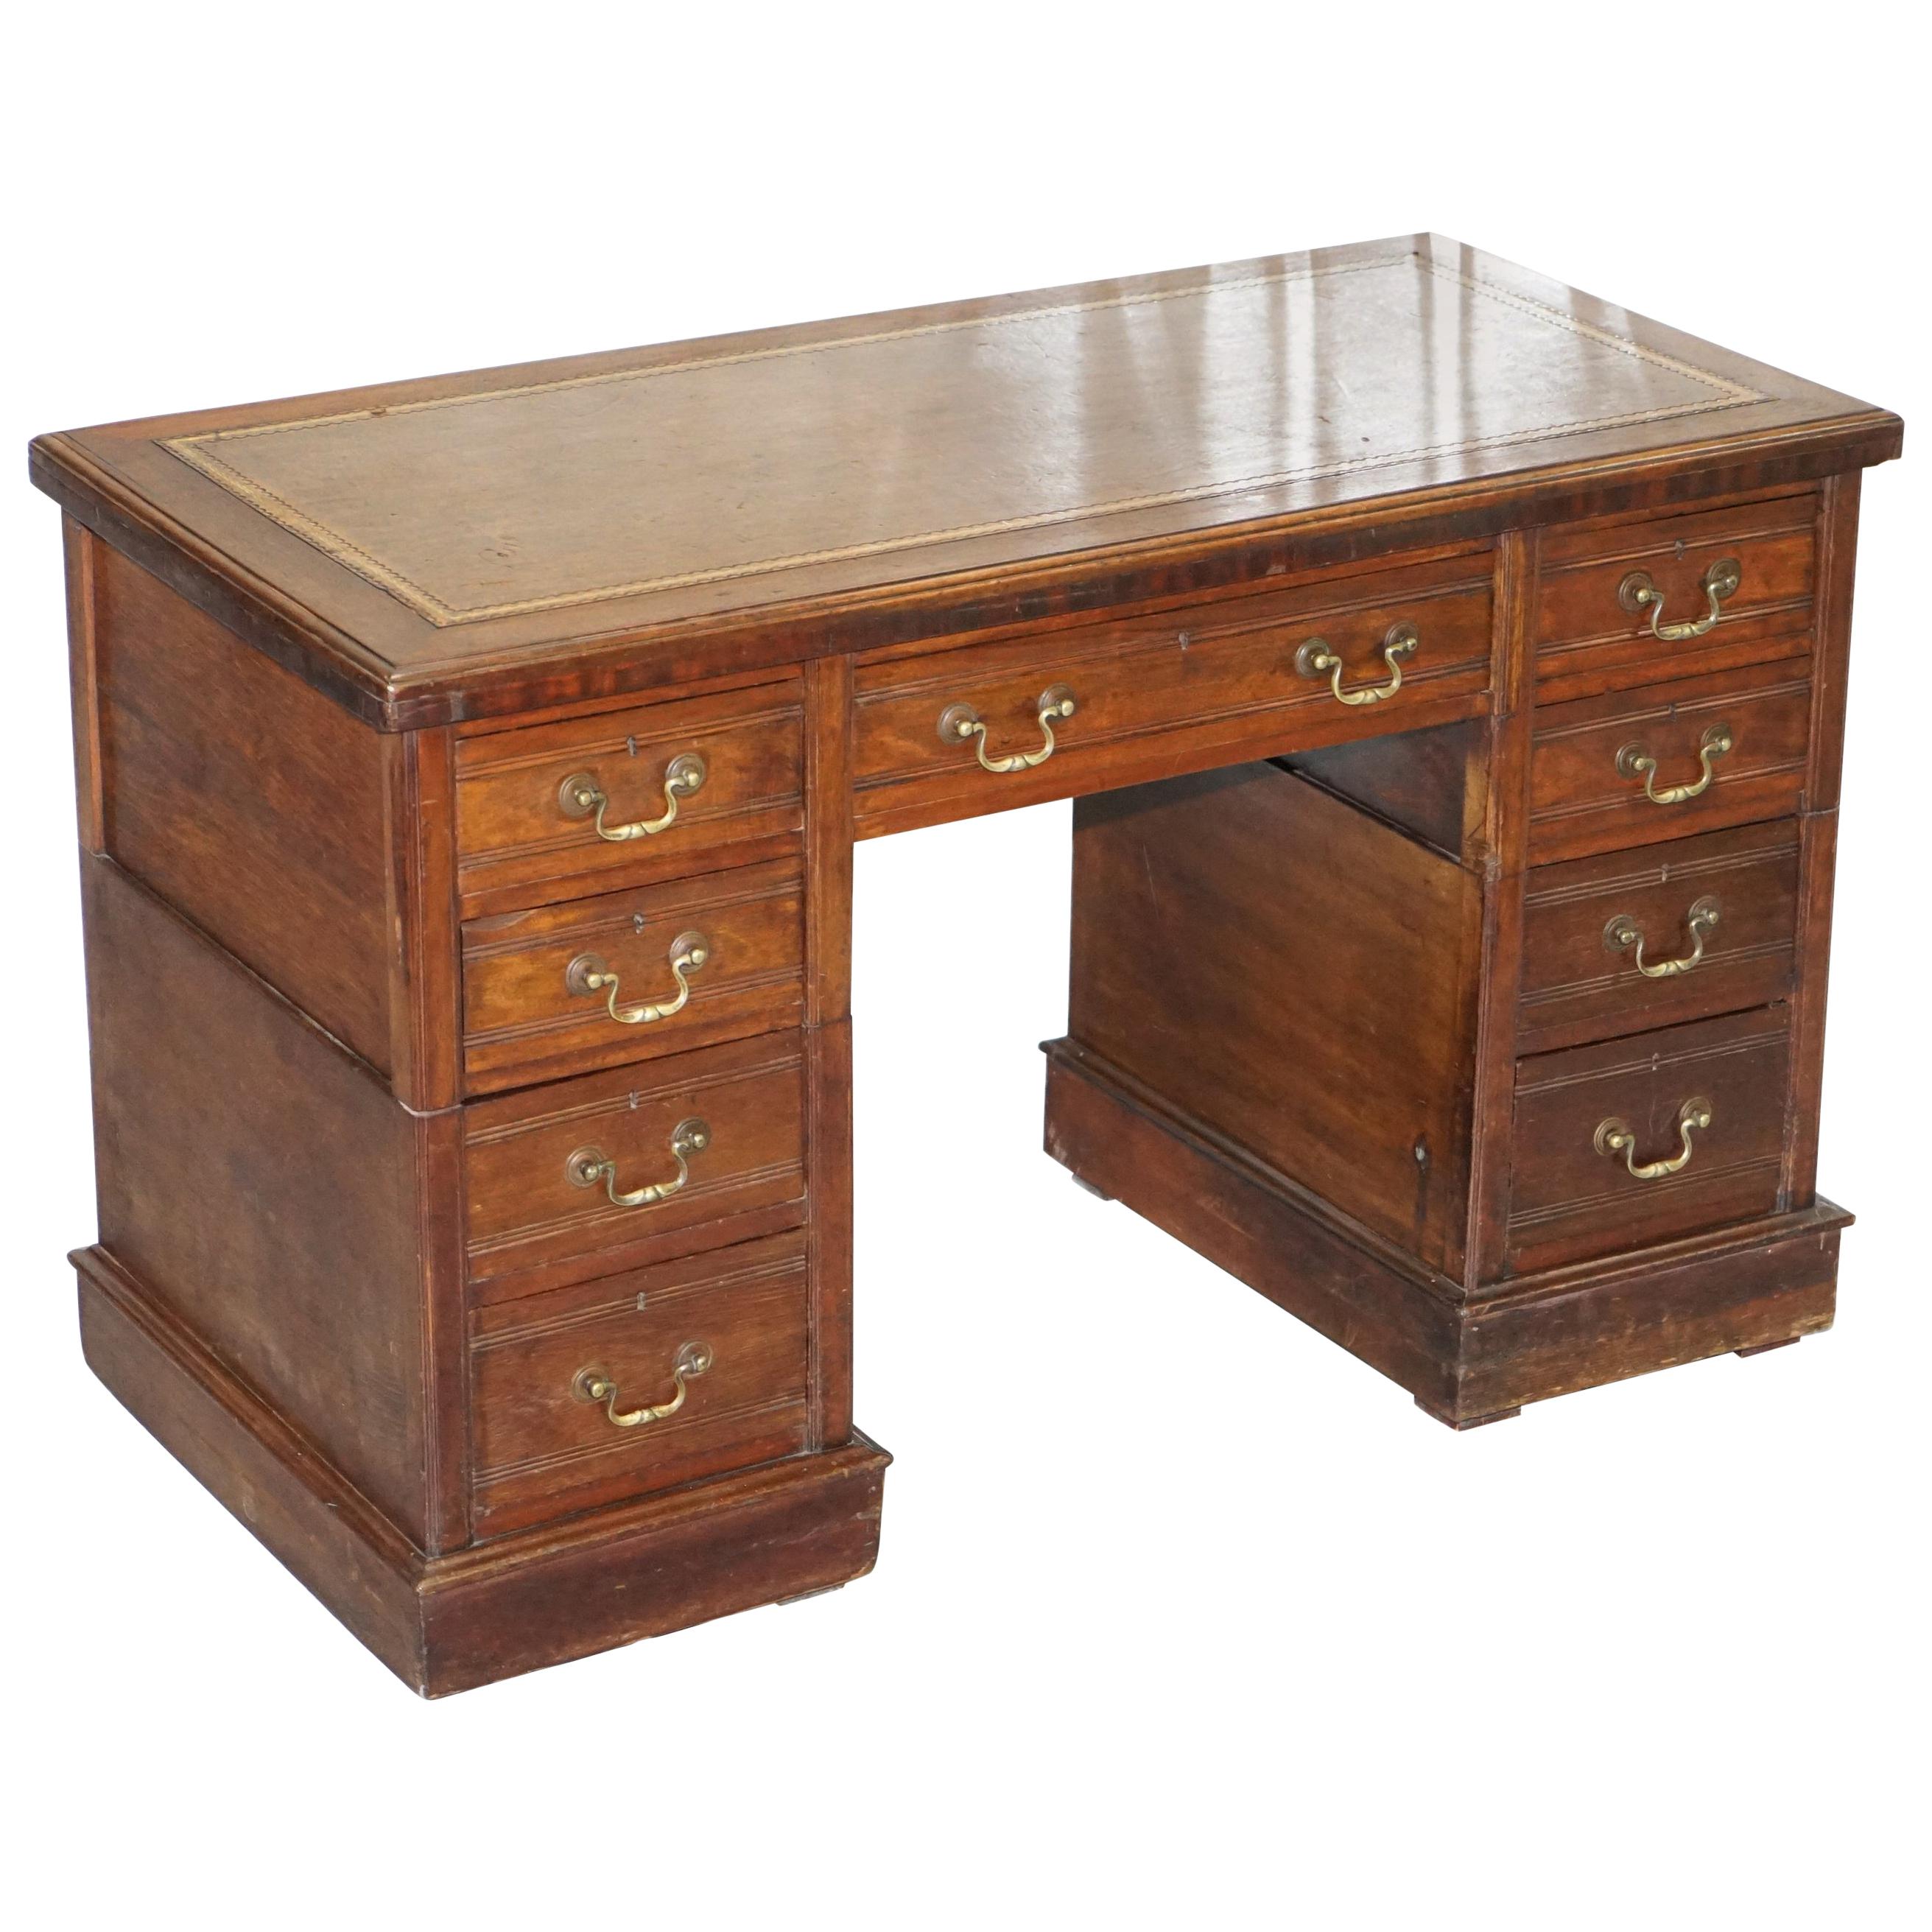 Victorian Mahogany Twin Pedestal Partner Desk Original Timber, Nice Leather Top